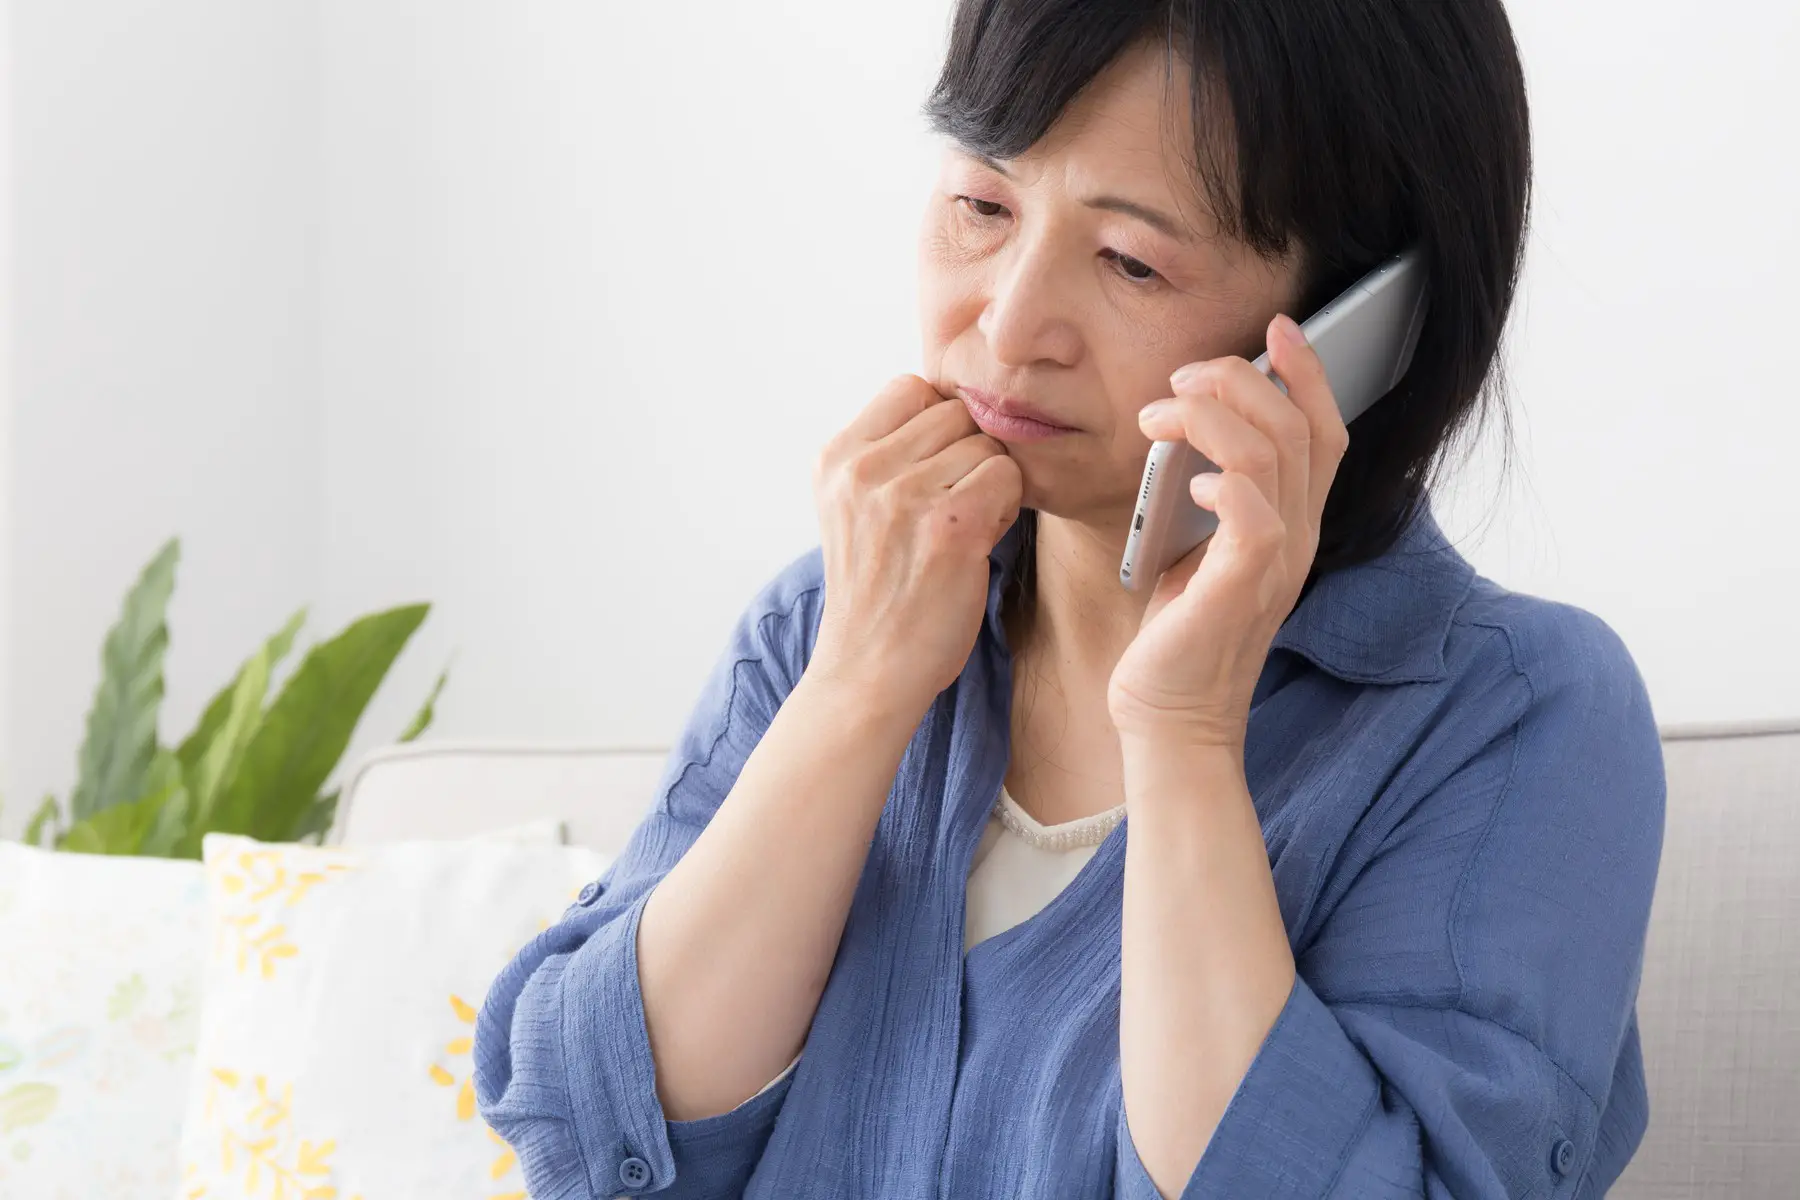 Mature woman calling eating disorder hotline, looks sad